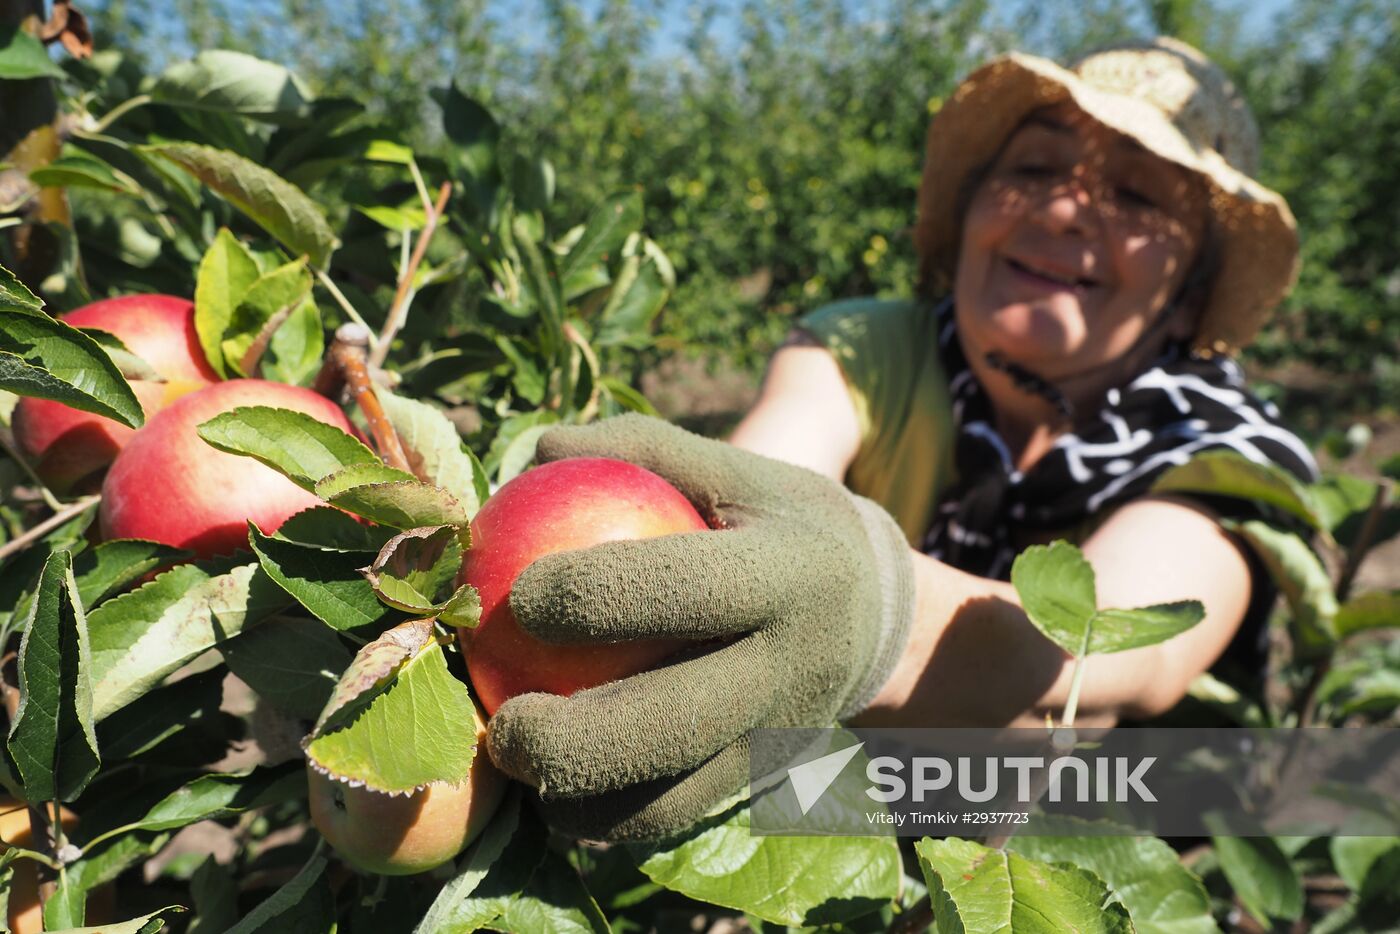 Picking apples in the Krasnodar Region.